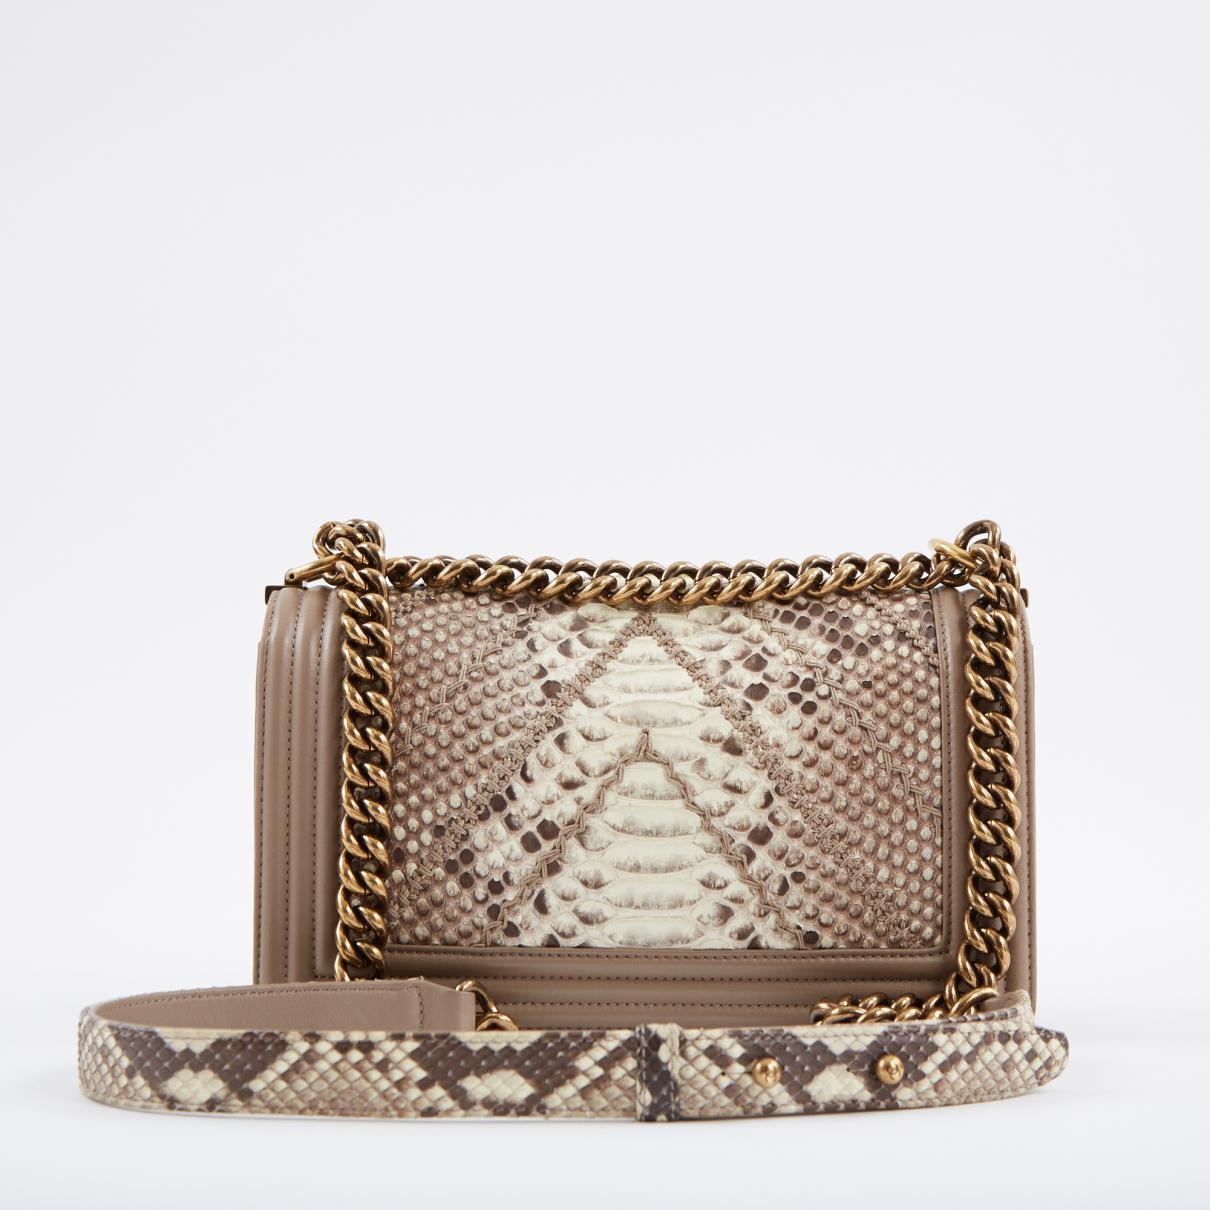 Chanel Leather Boy Python Crossbody Bag in Beige (Natural) - Lyst